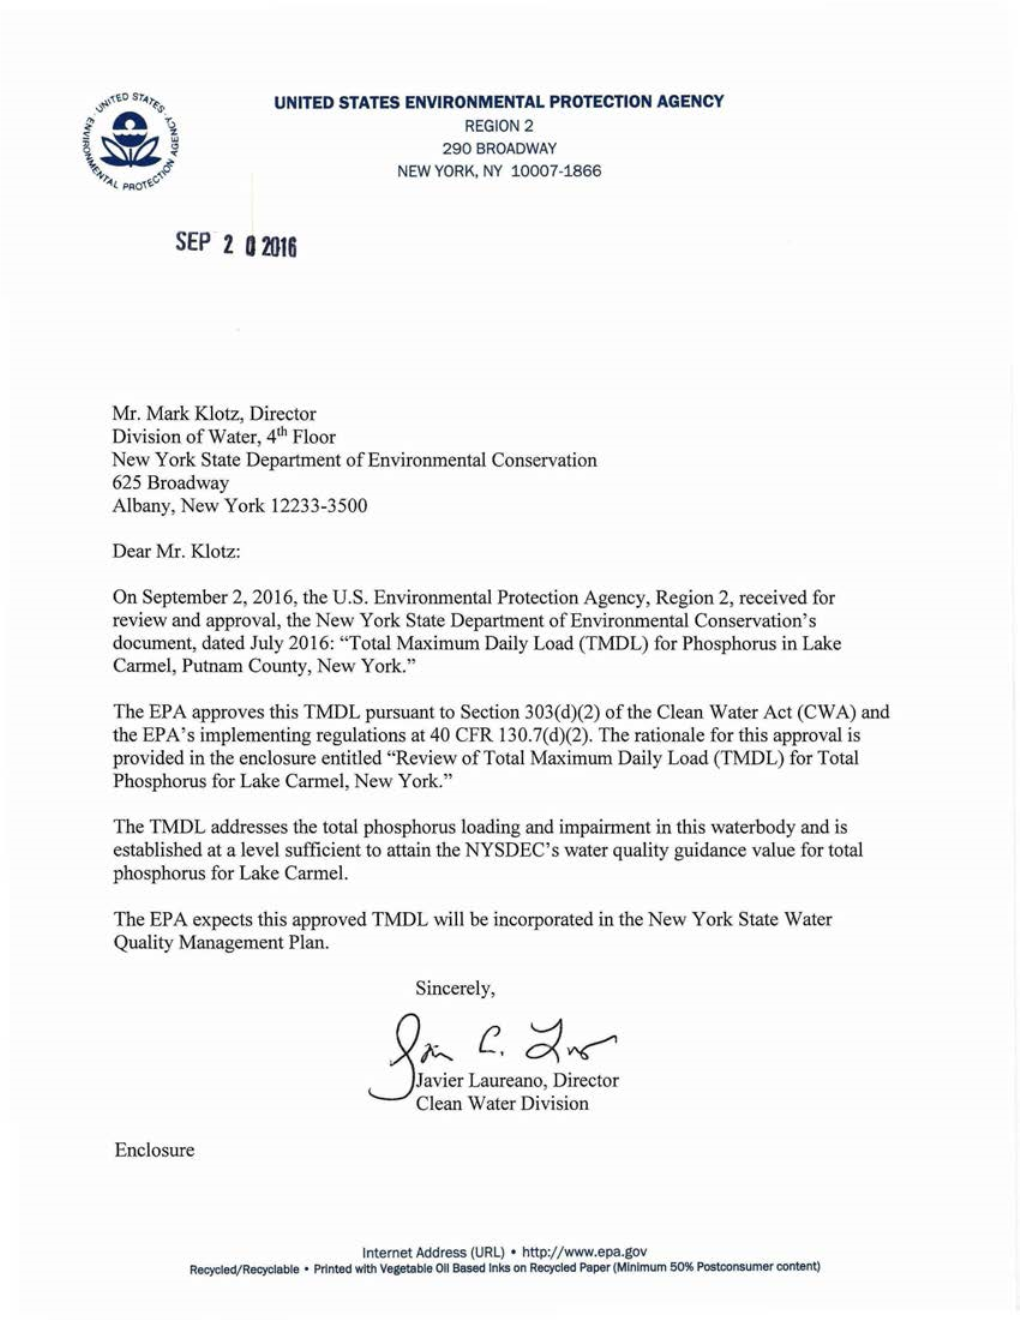 Lake Carmel TMDL EPA Approval Letter (PDF)